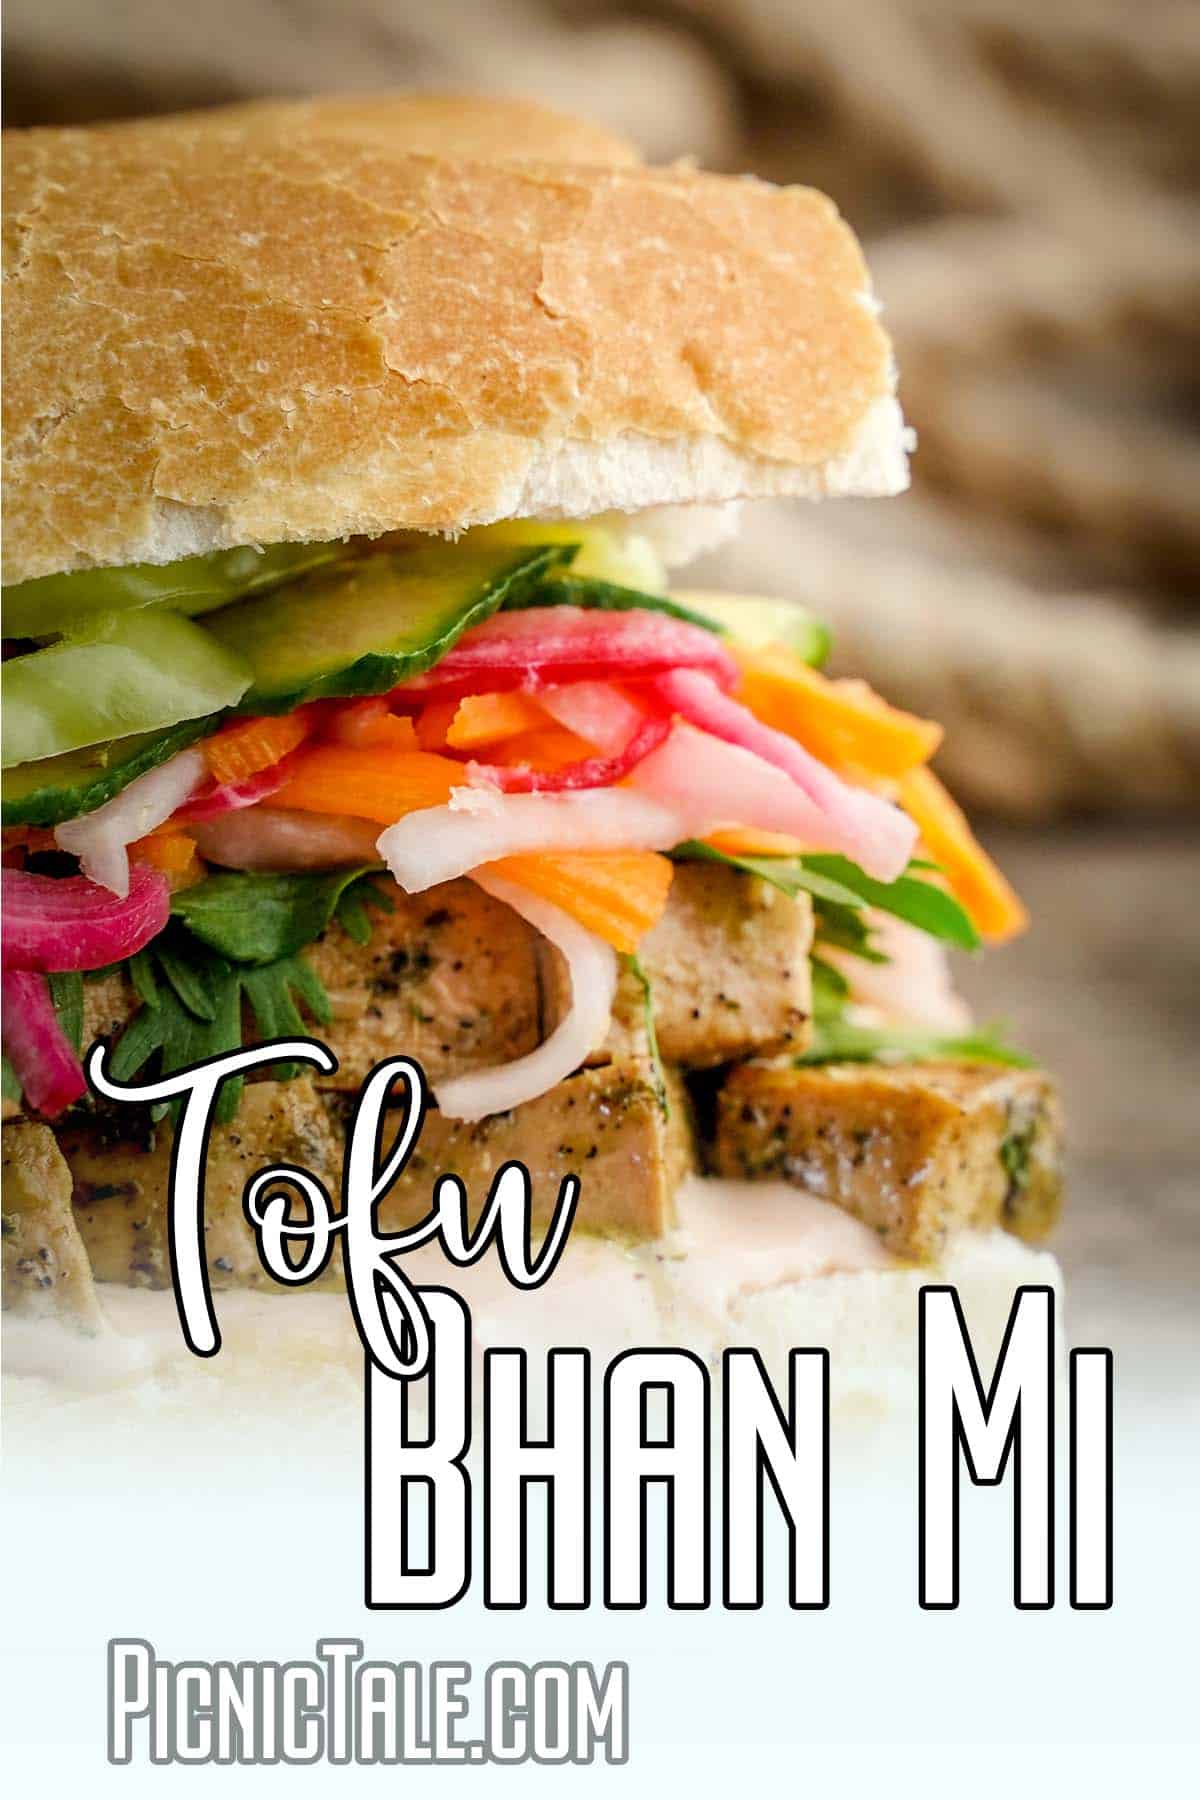 Tofu Bhan Mi sandwich, close up wording on bottom.